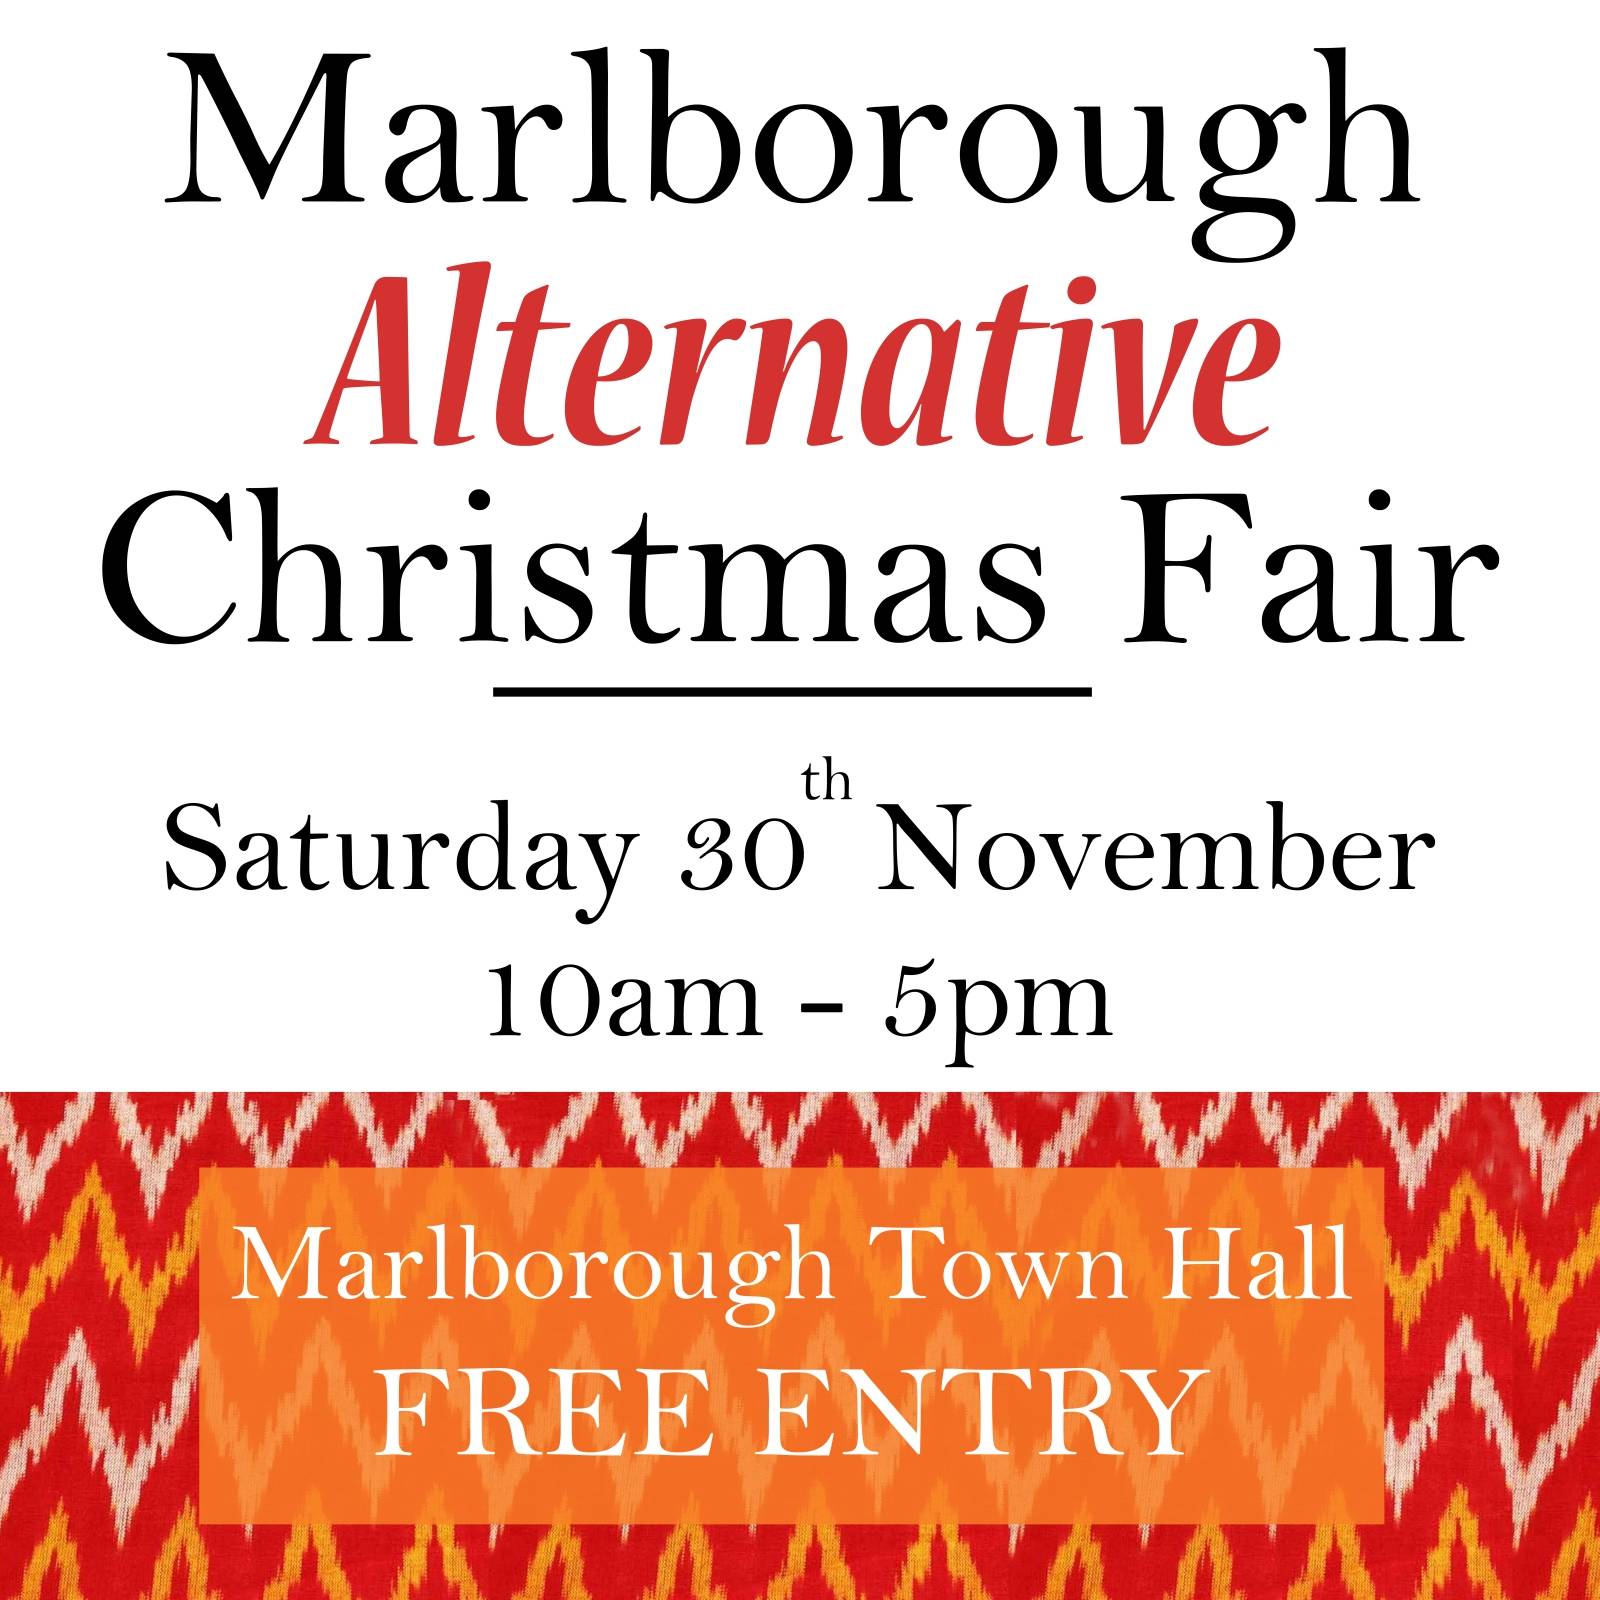 Marlborough Alternative Christmas Fair - Indigo Antiques